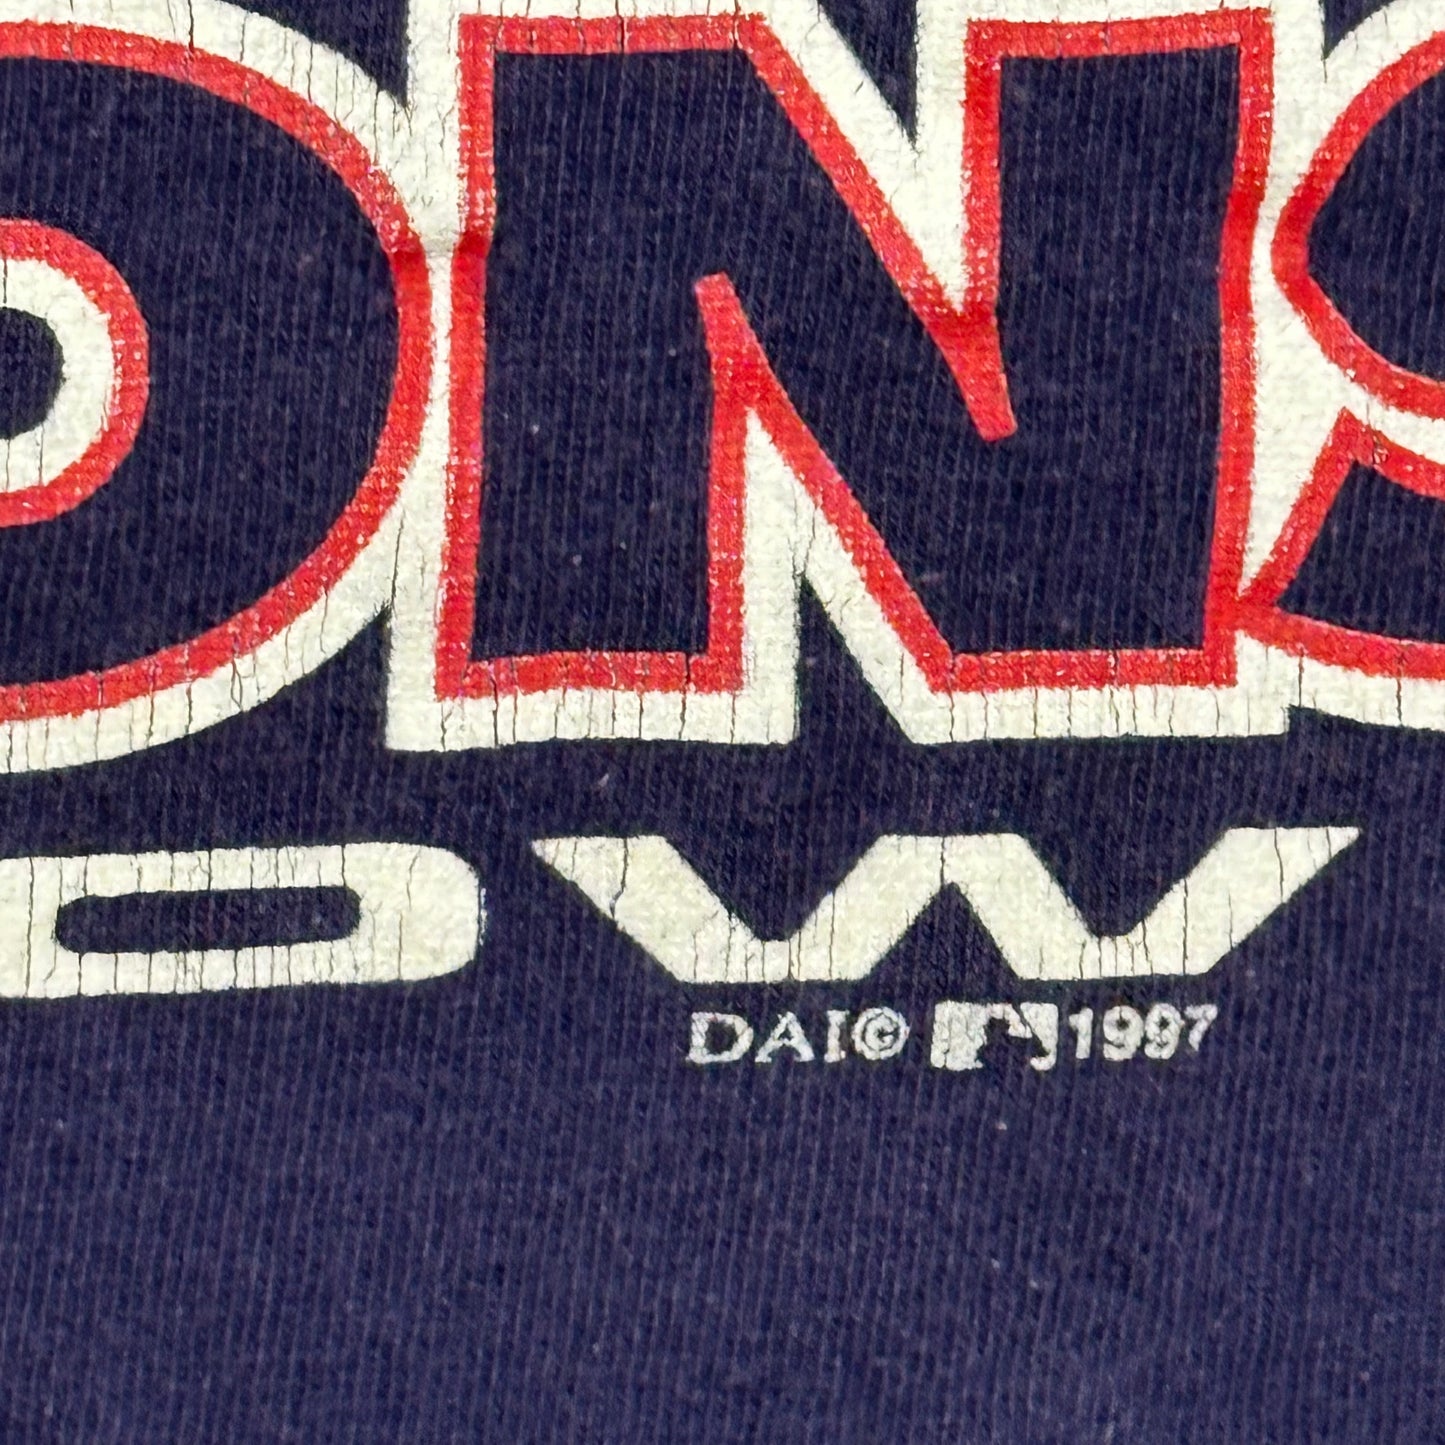 Cleveland Indians, Vintage 1997 T-shirt, Size: Medium